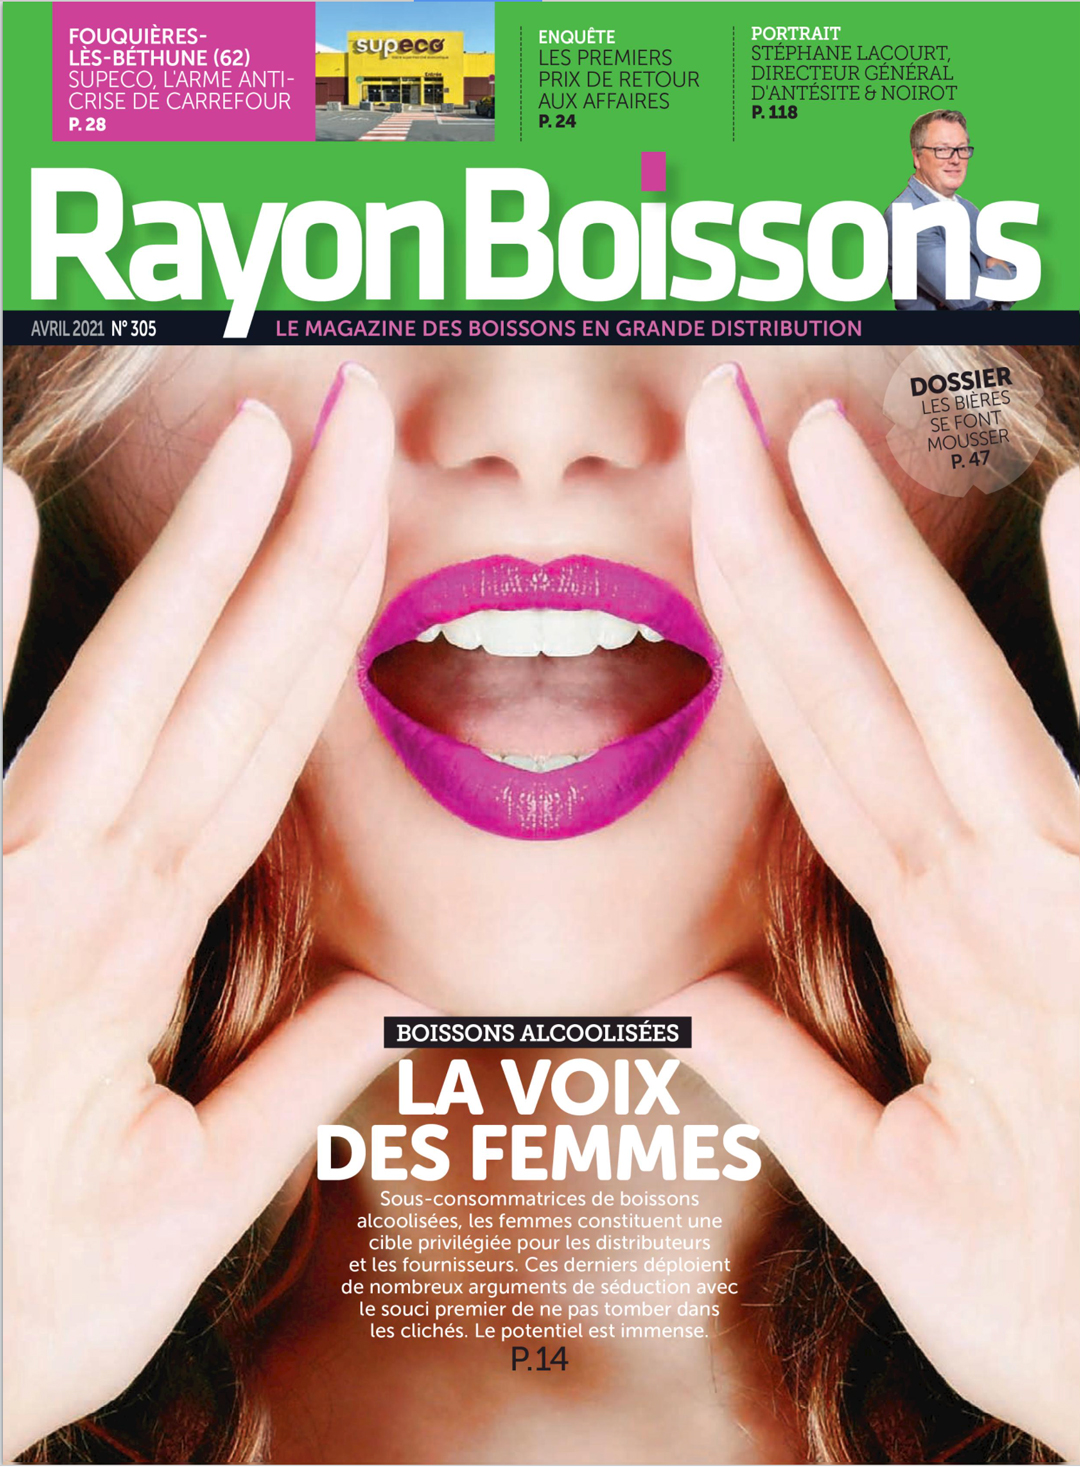 Cover Rayon Boissons N°305 April 2021